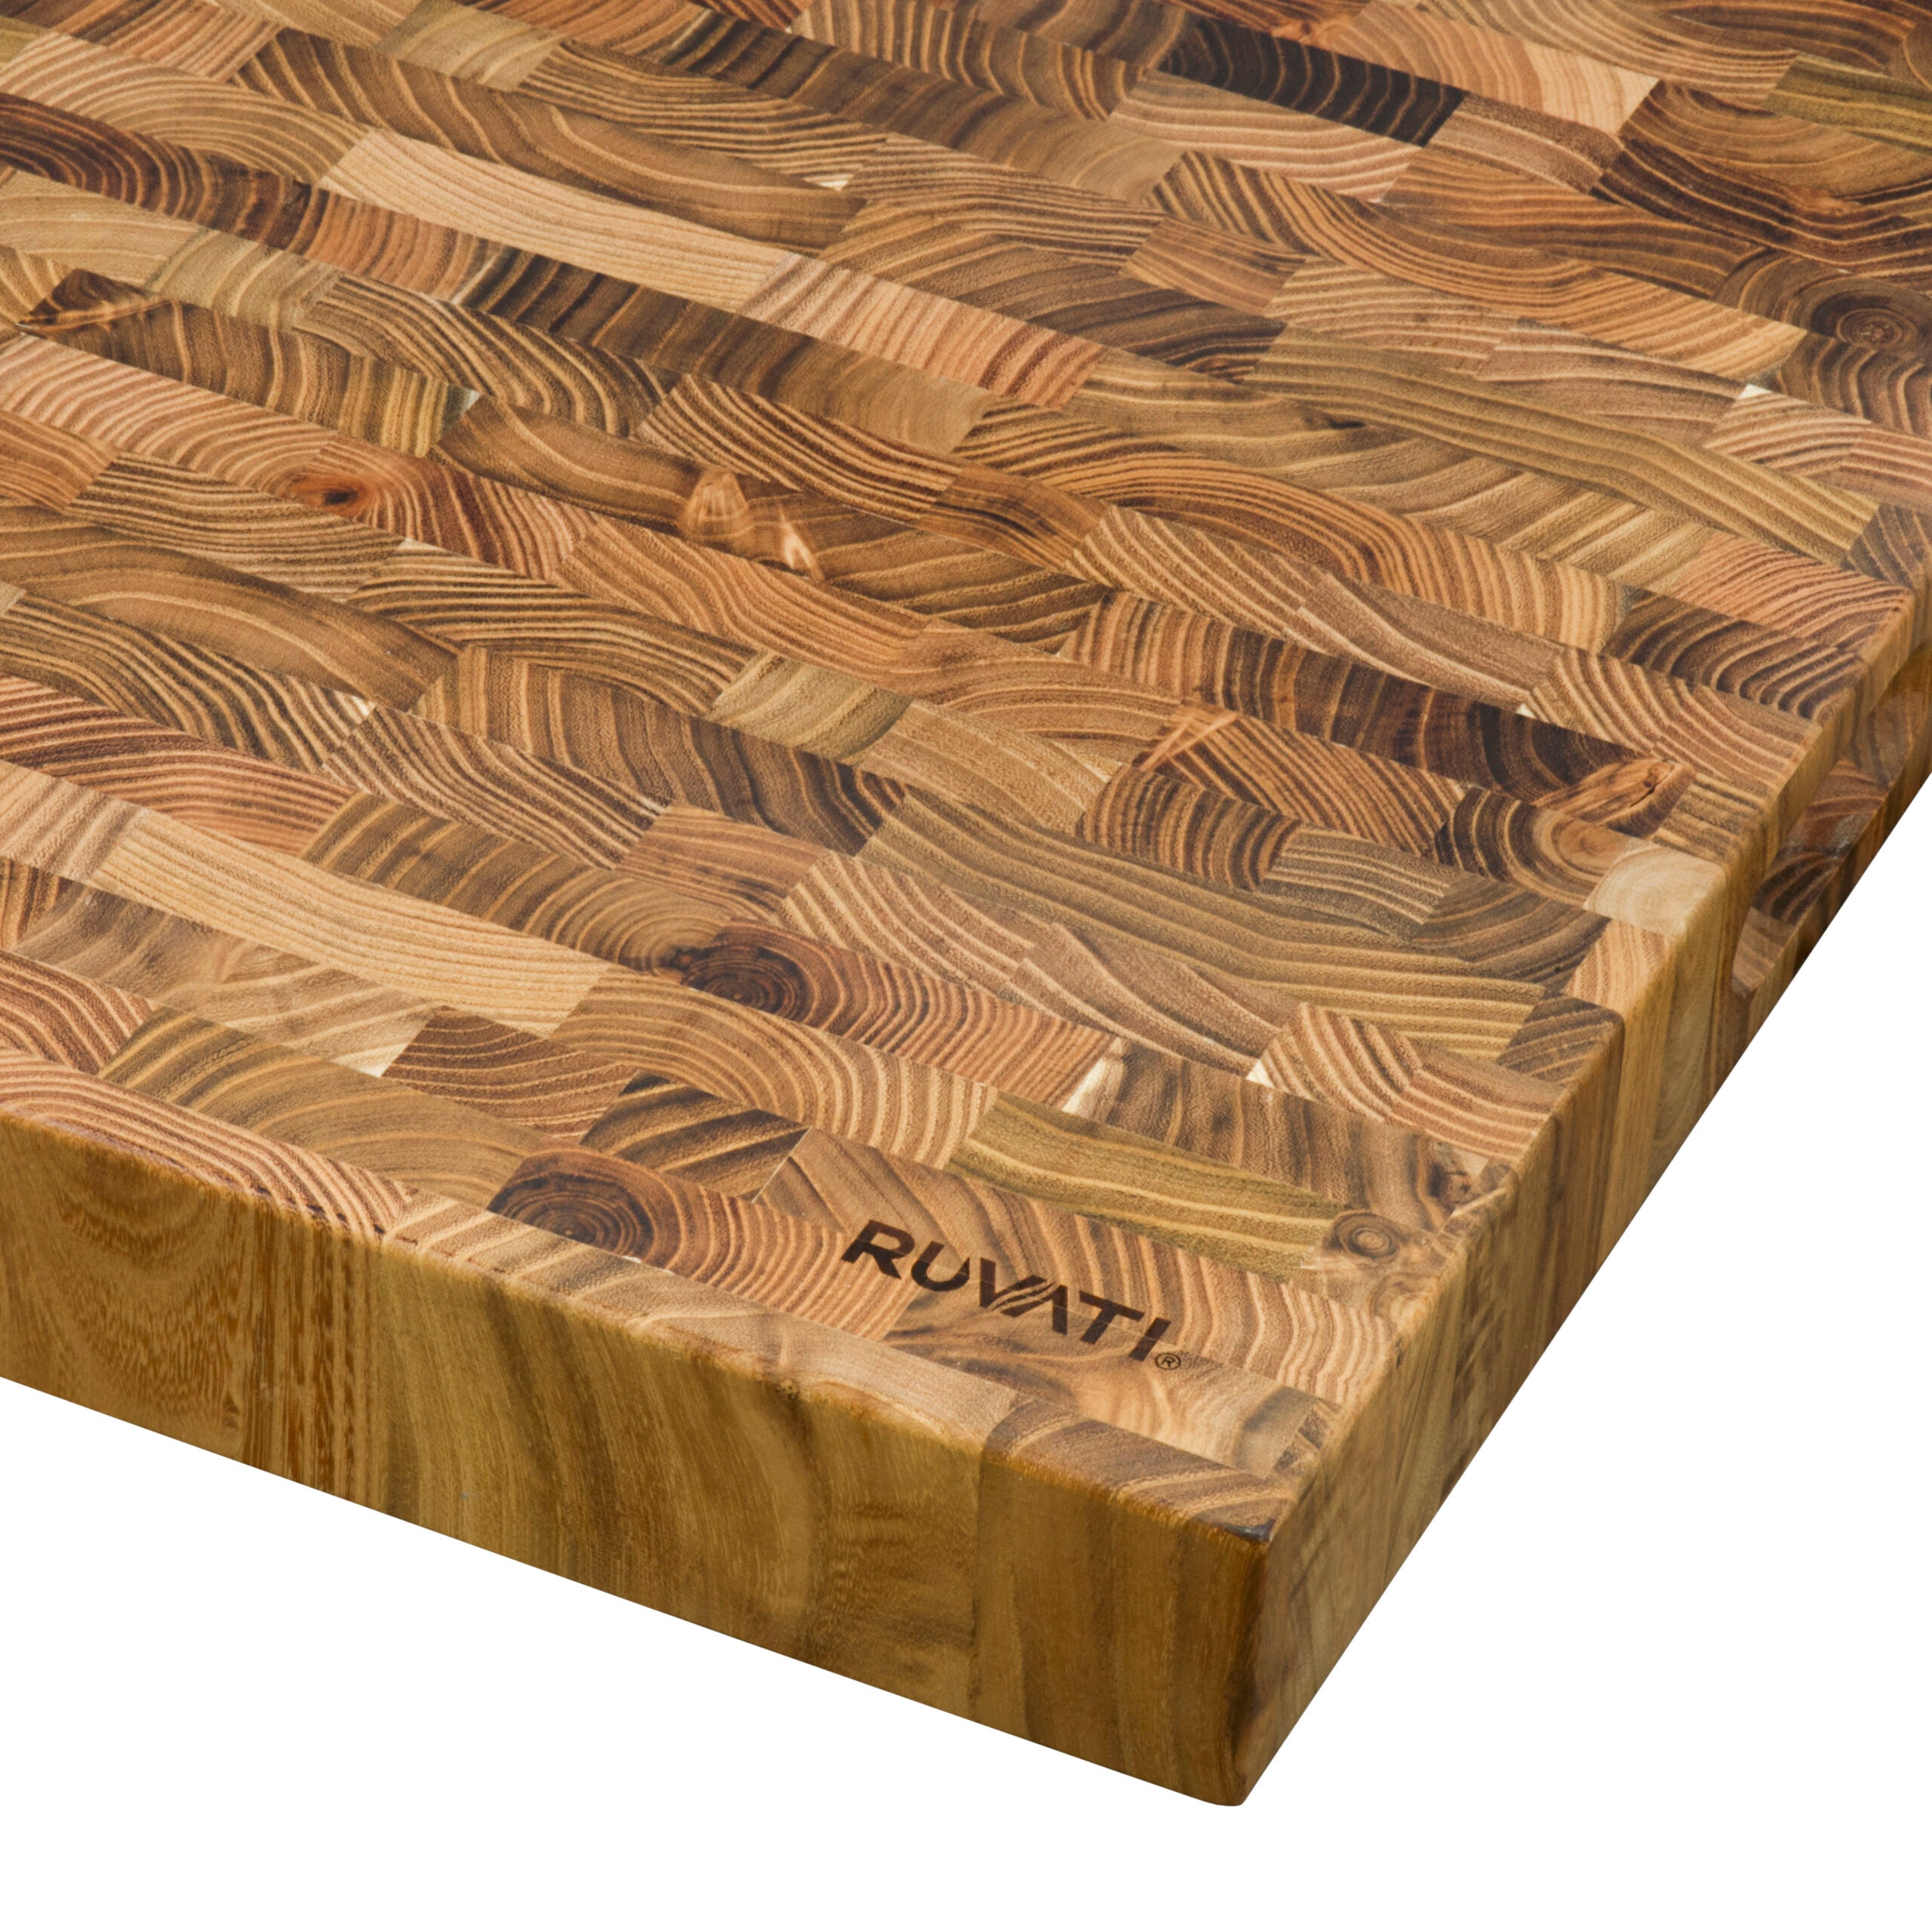 Ruvati End-Grain Teak Butcher Block - Solid Wood Large Workstation Cutting Board, 17 x 16 x 2 inches - RVA2445TKE